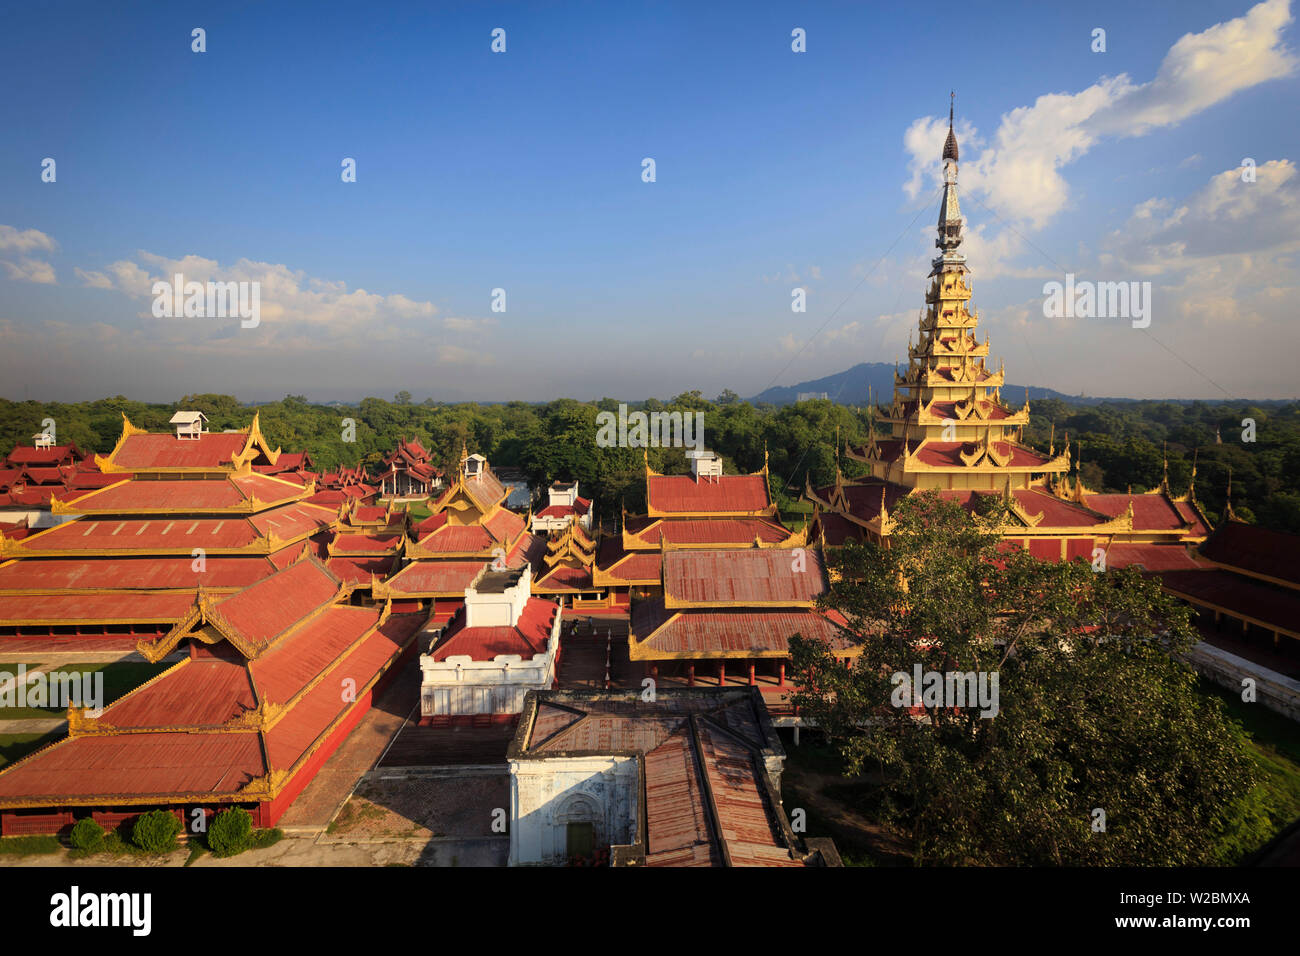 Myanmar (Burma), Mandalay, Mandalay Palace Stock Photo